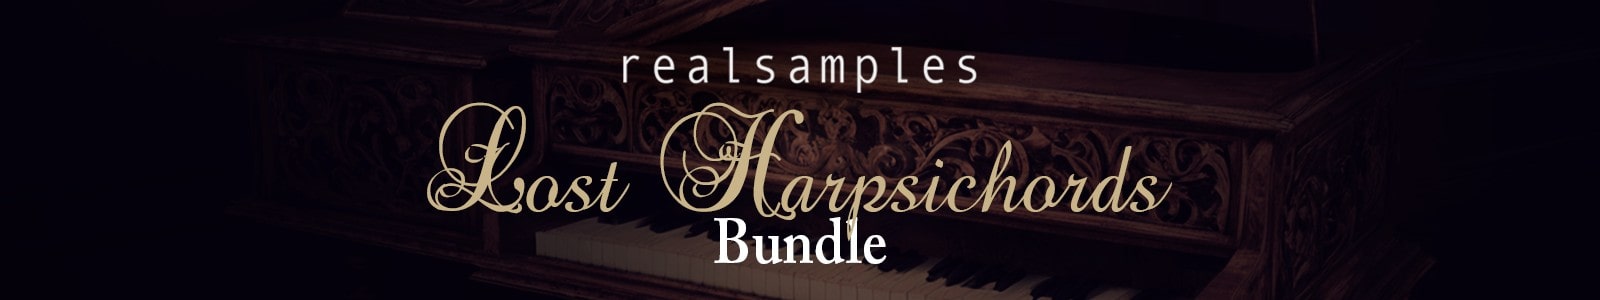 Realsamples Lost Harpsichords Bundle